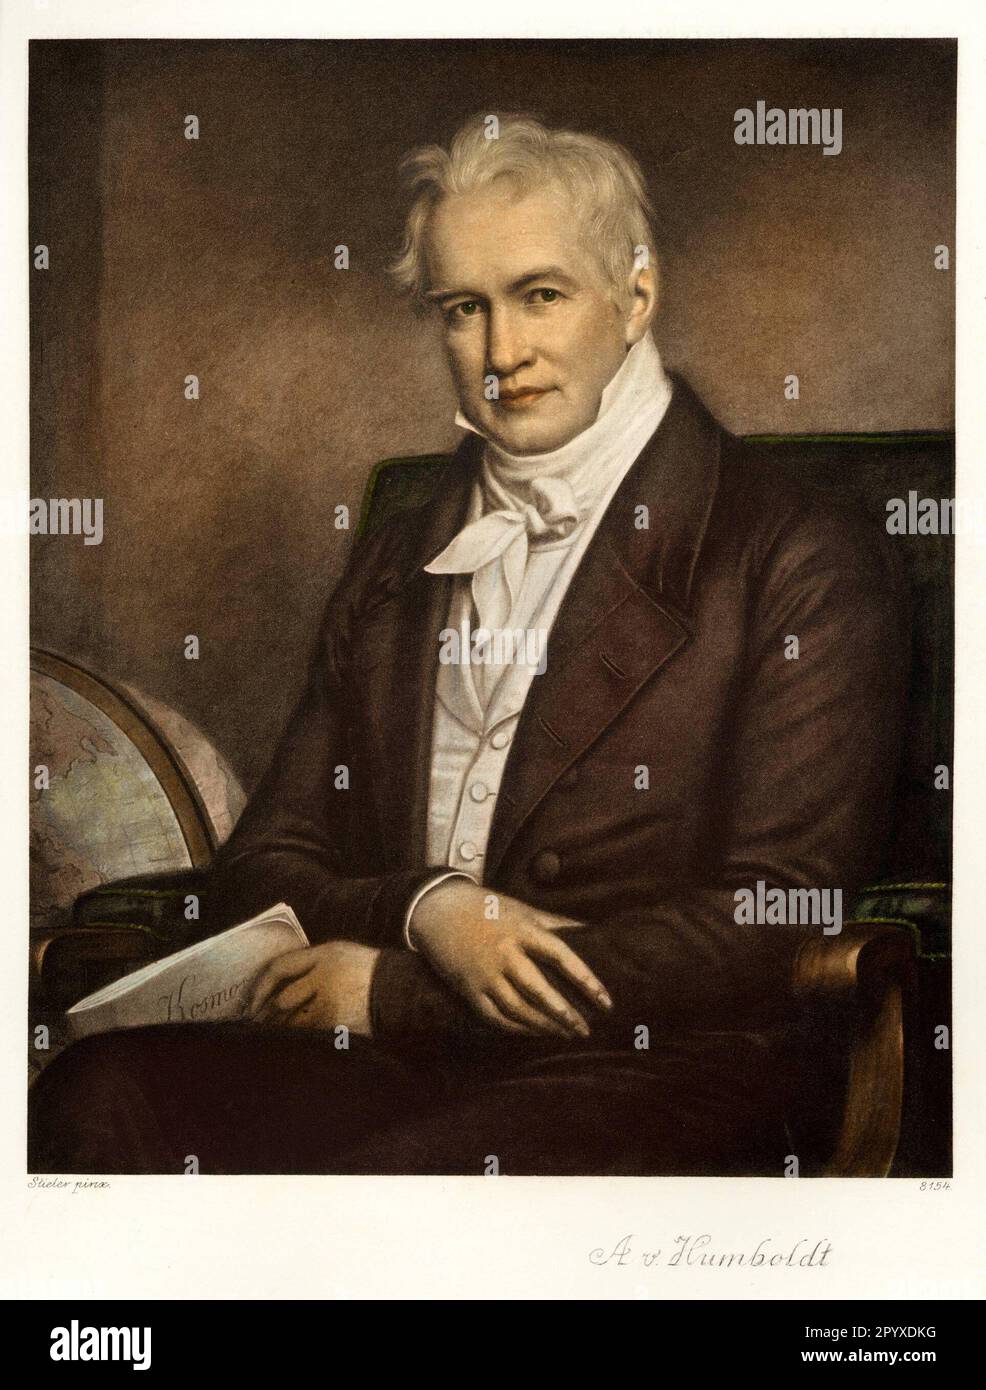 Alexander Freiherr von Humboldt (1769-1859), naturaliste allemand. Peinture de Joseph Karl Stieler (1781-1858). Photo: Heliogravure, Corpus Imaginum, Collection Hanfstaengl. [traduction automatique] Banque D'Images